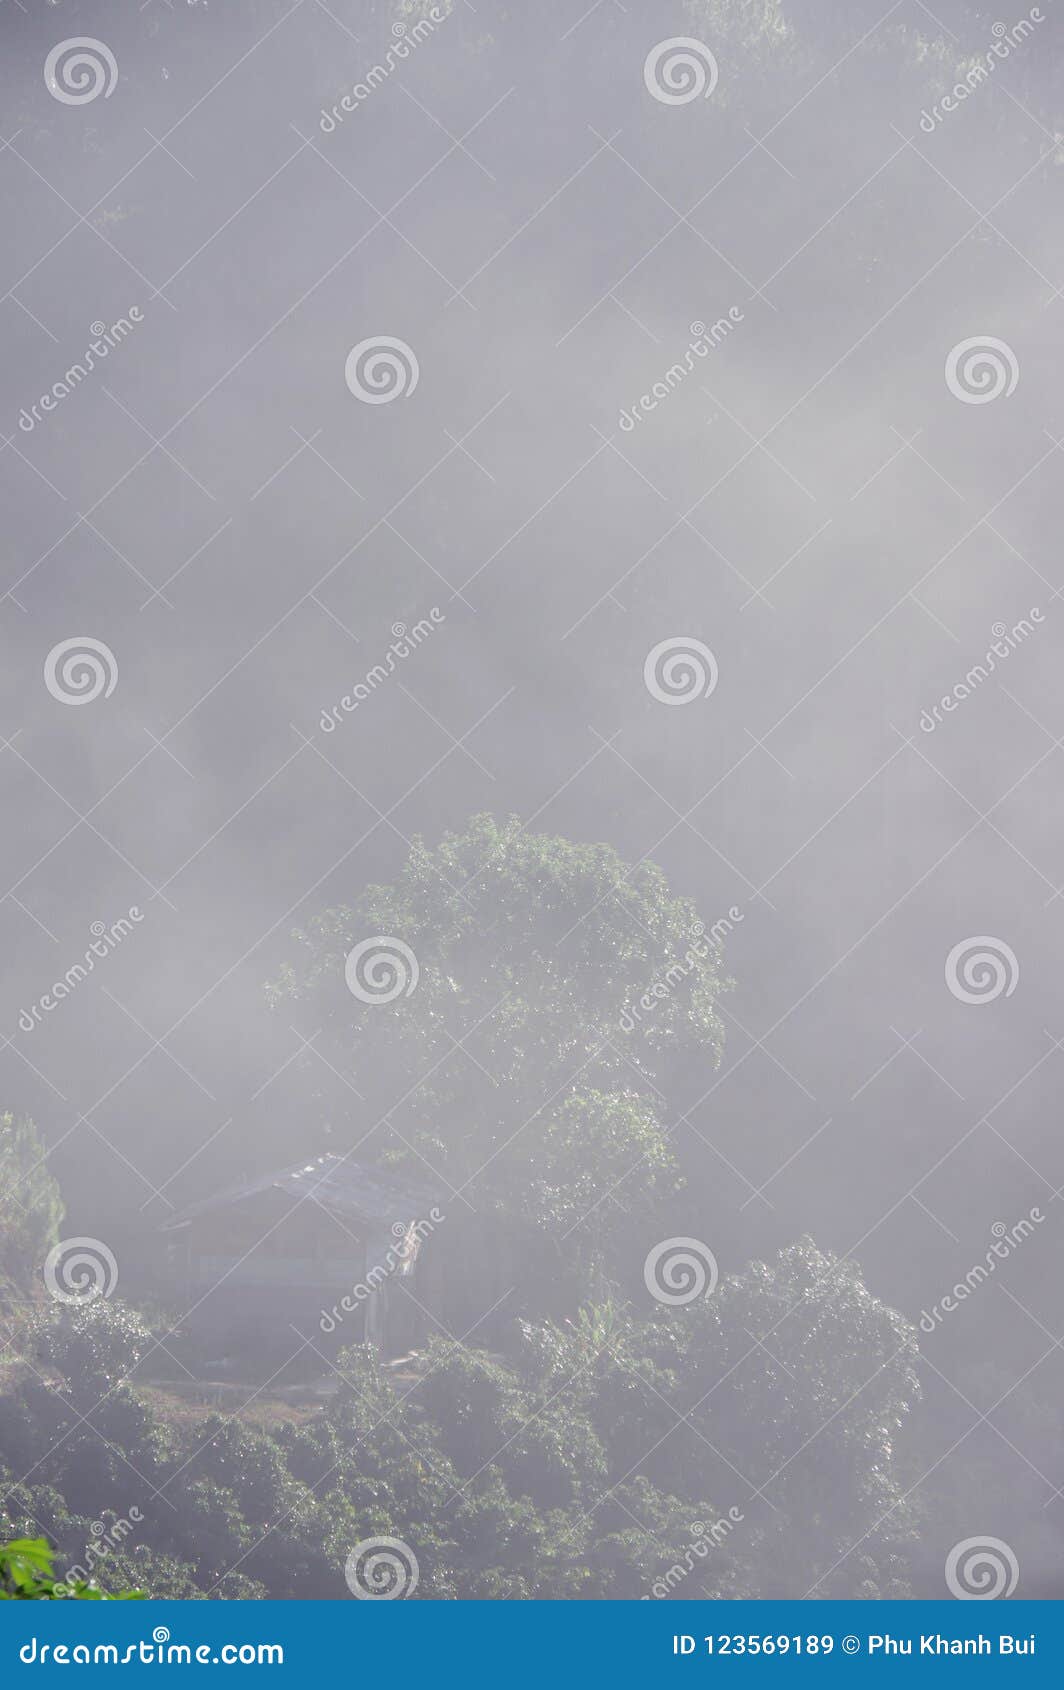 background with dense fog